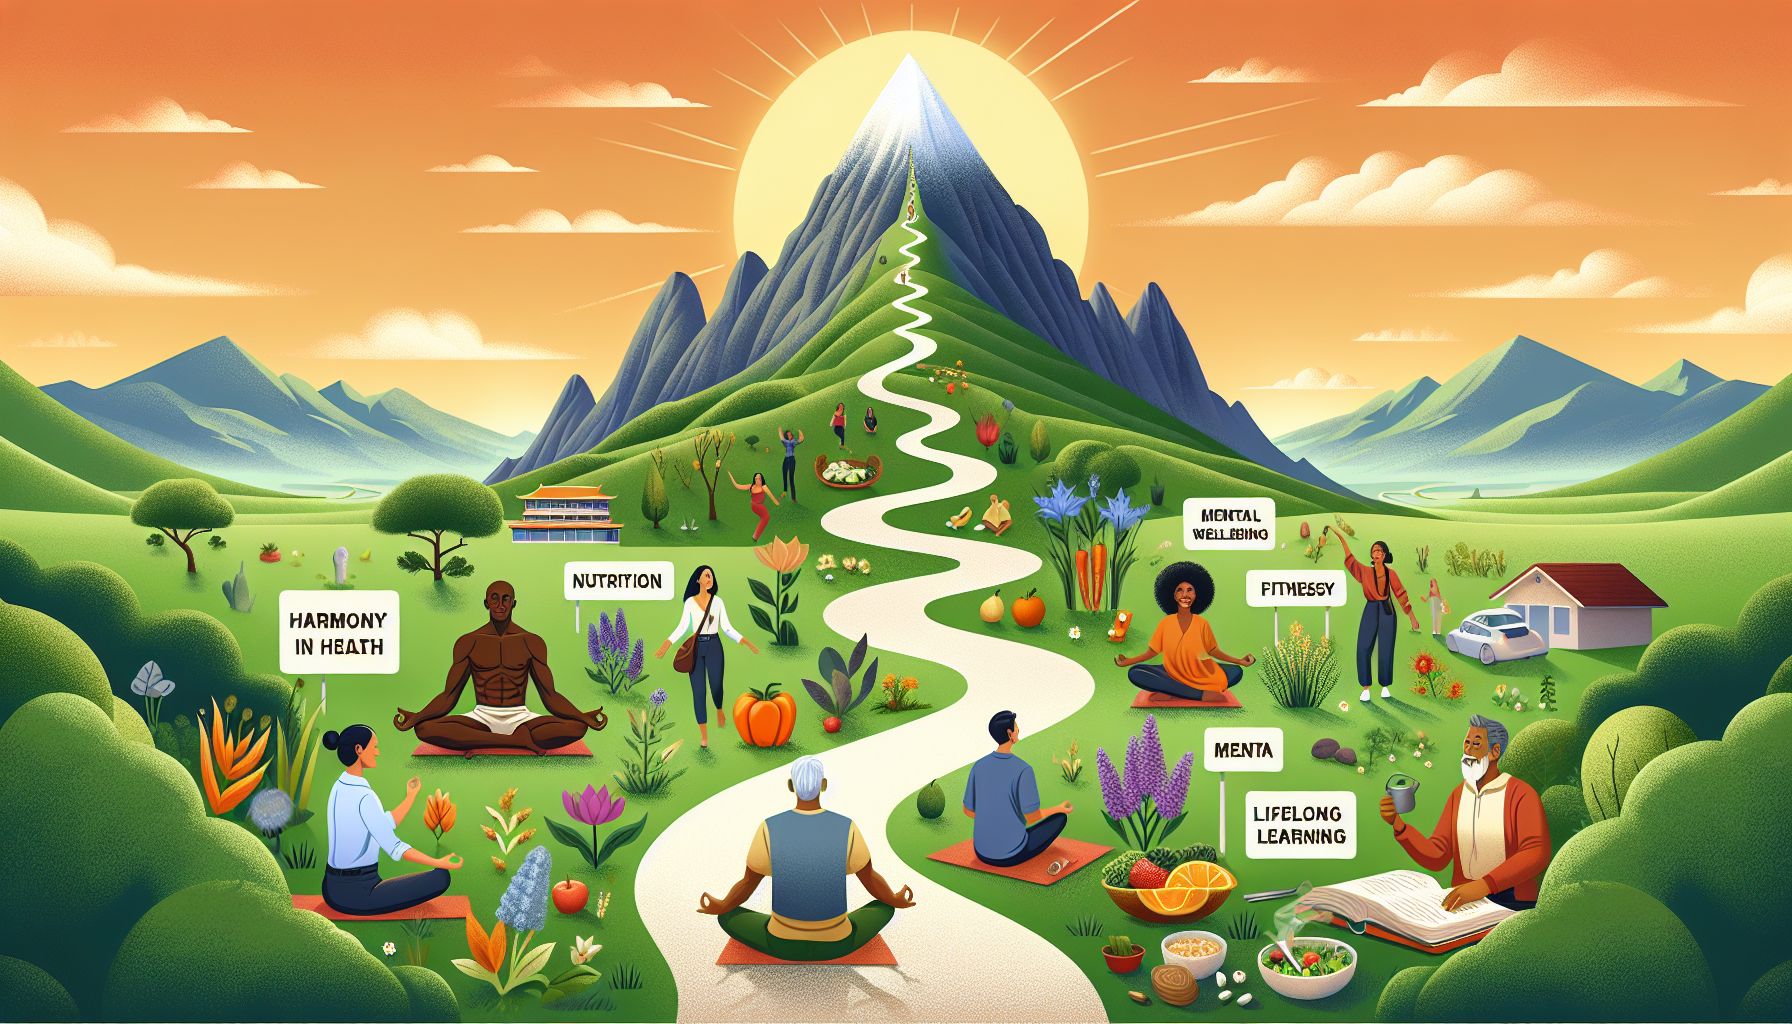 Harmony in Health: A Holistic Journey towards Lifelong Learning